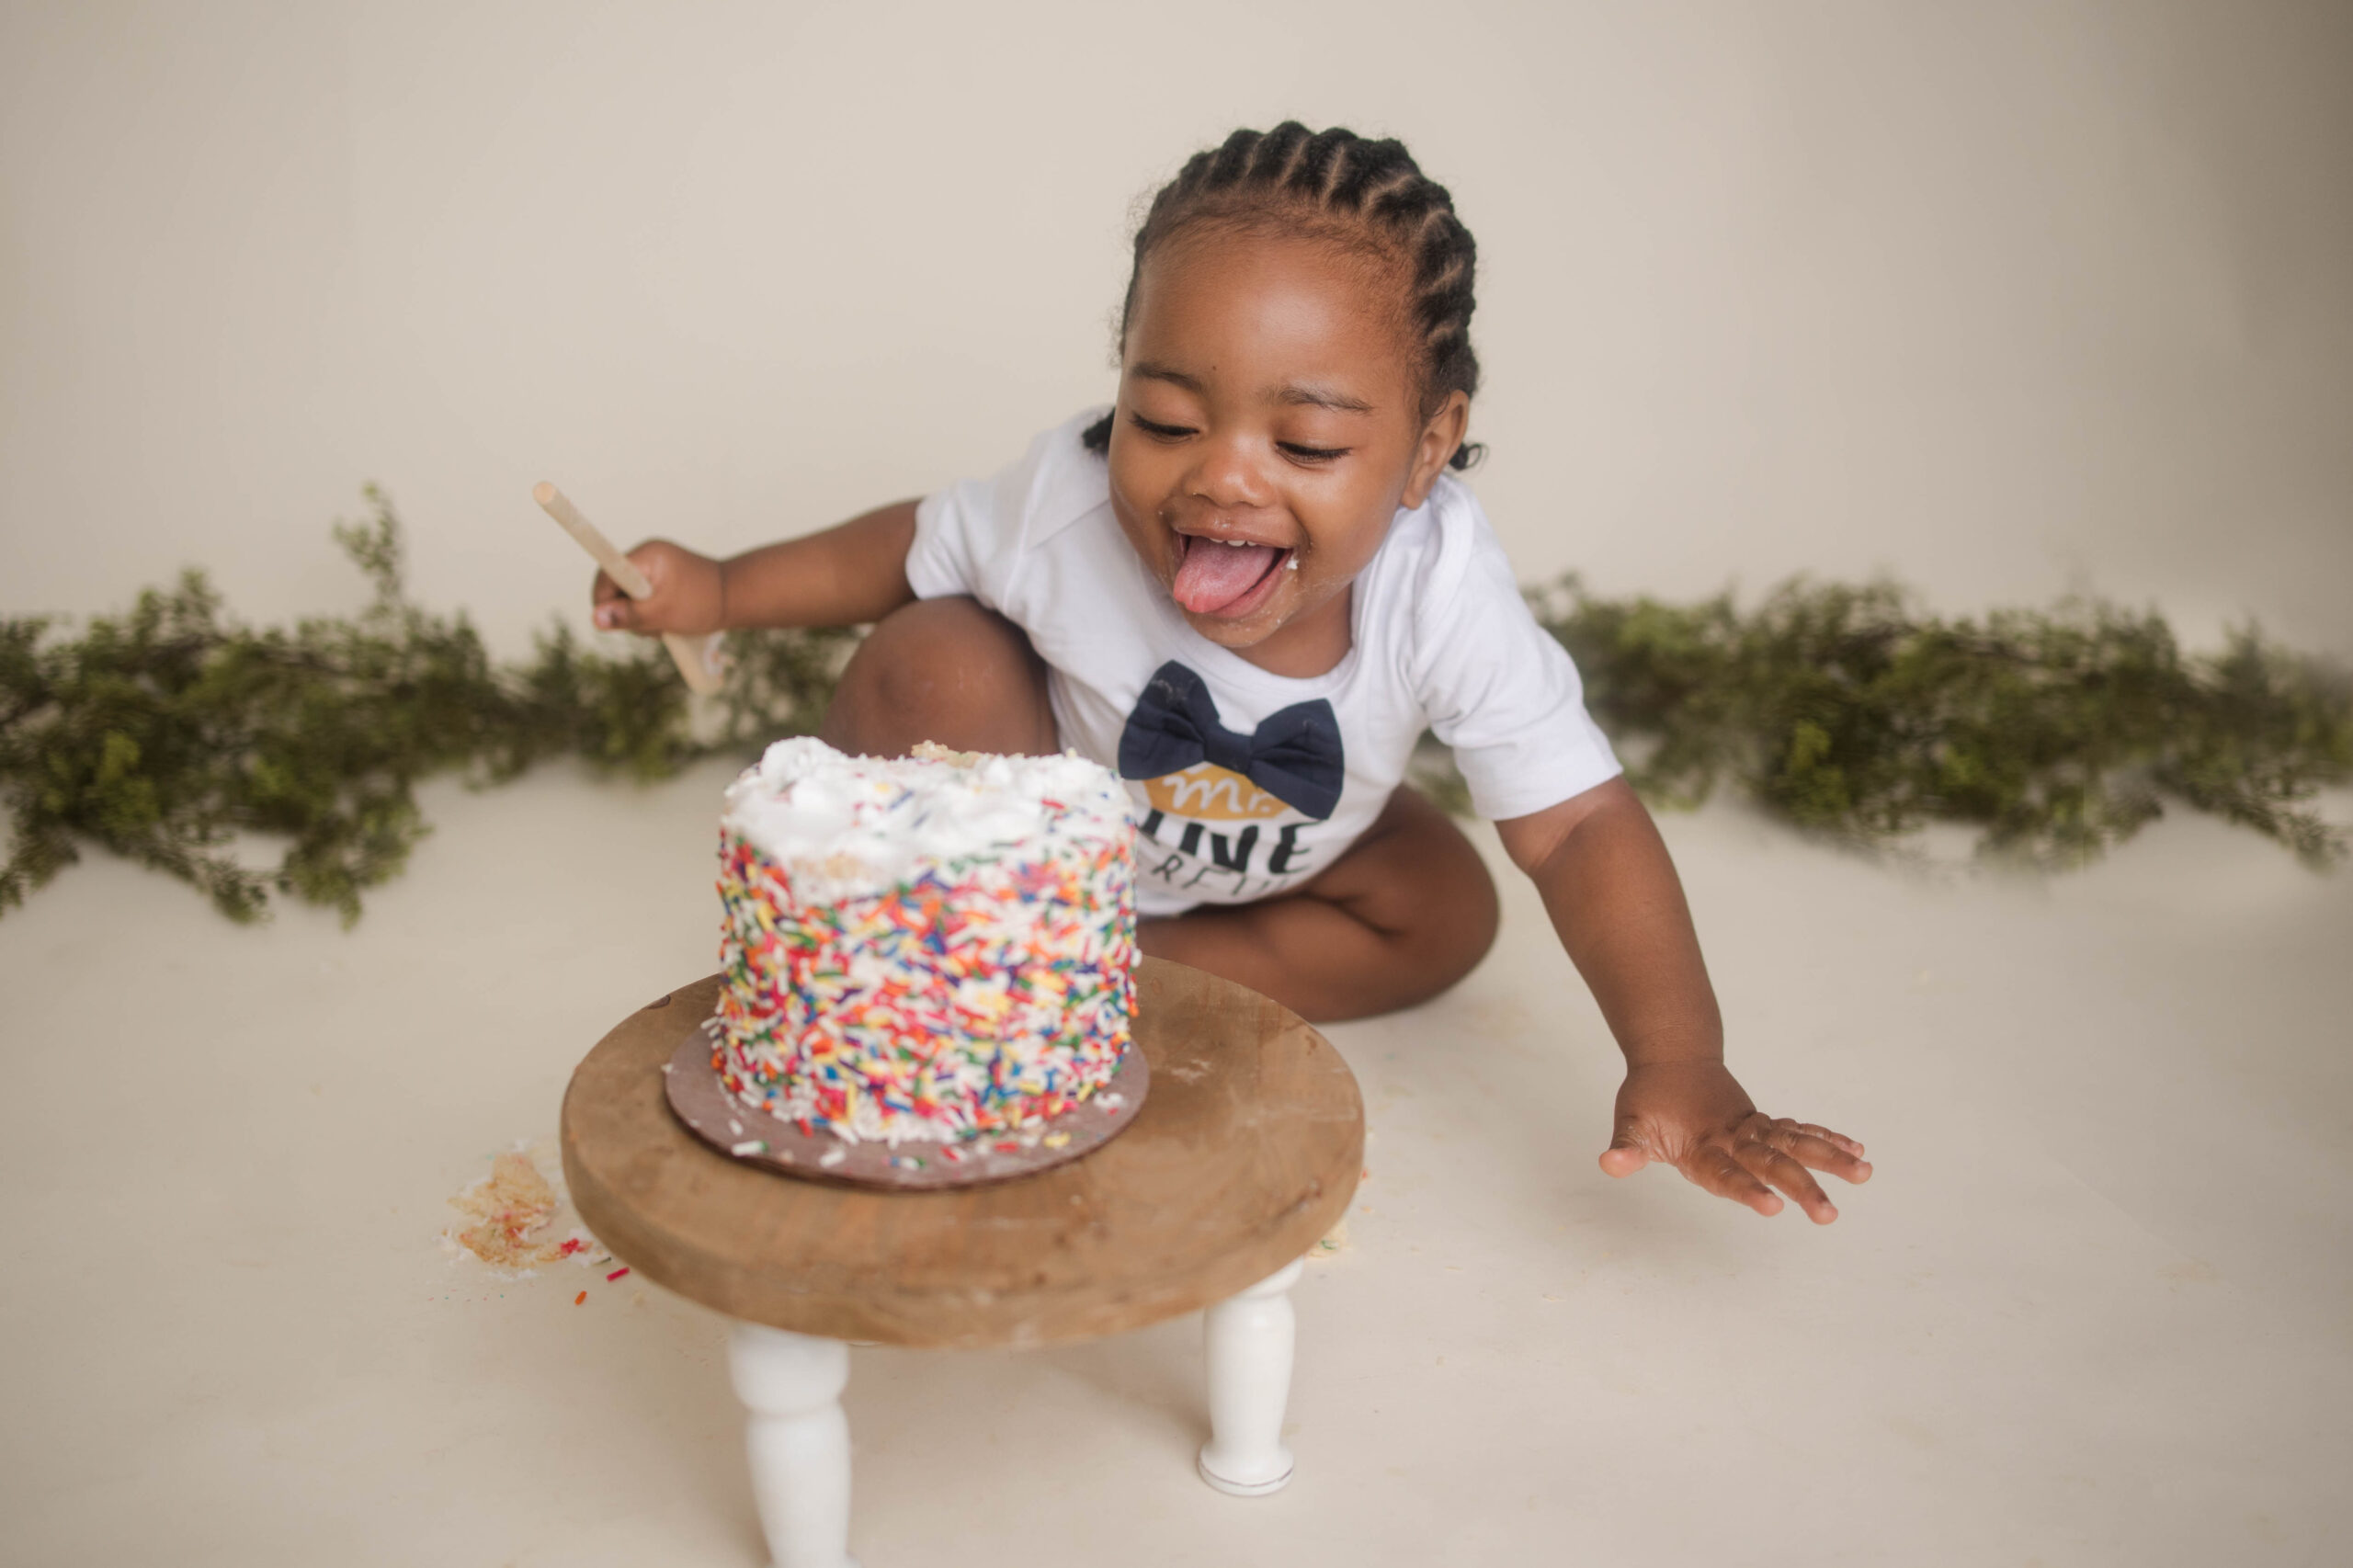 One year old boy eating cake for first birthday. Millbury Massachusetts